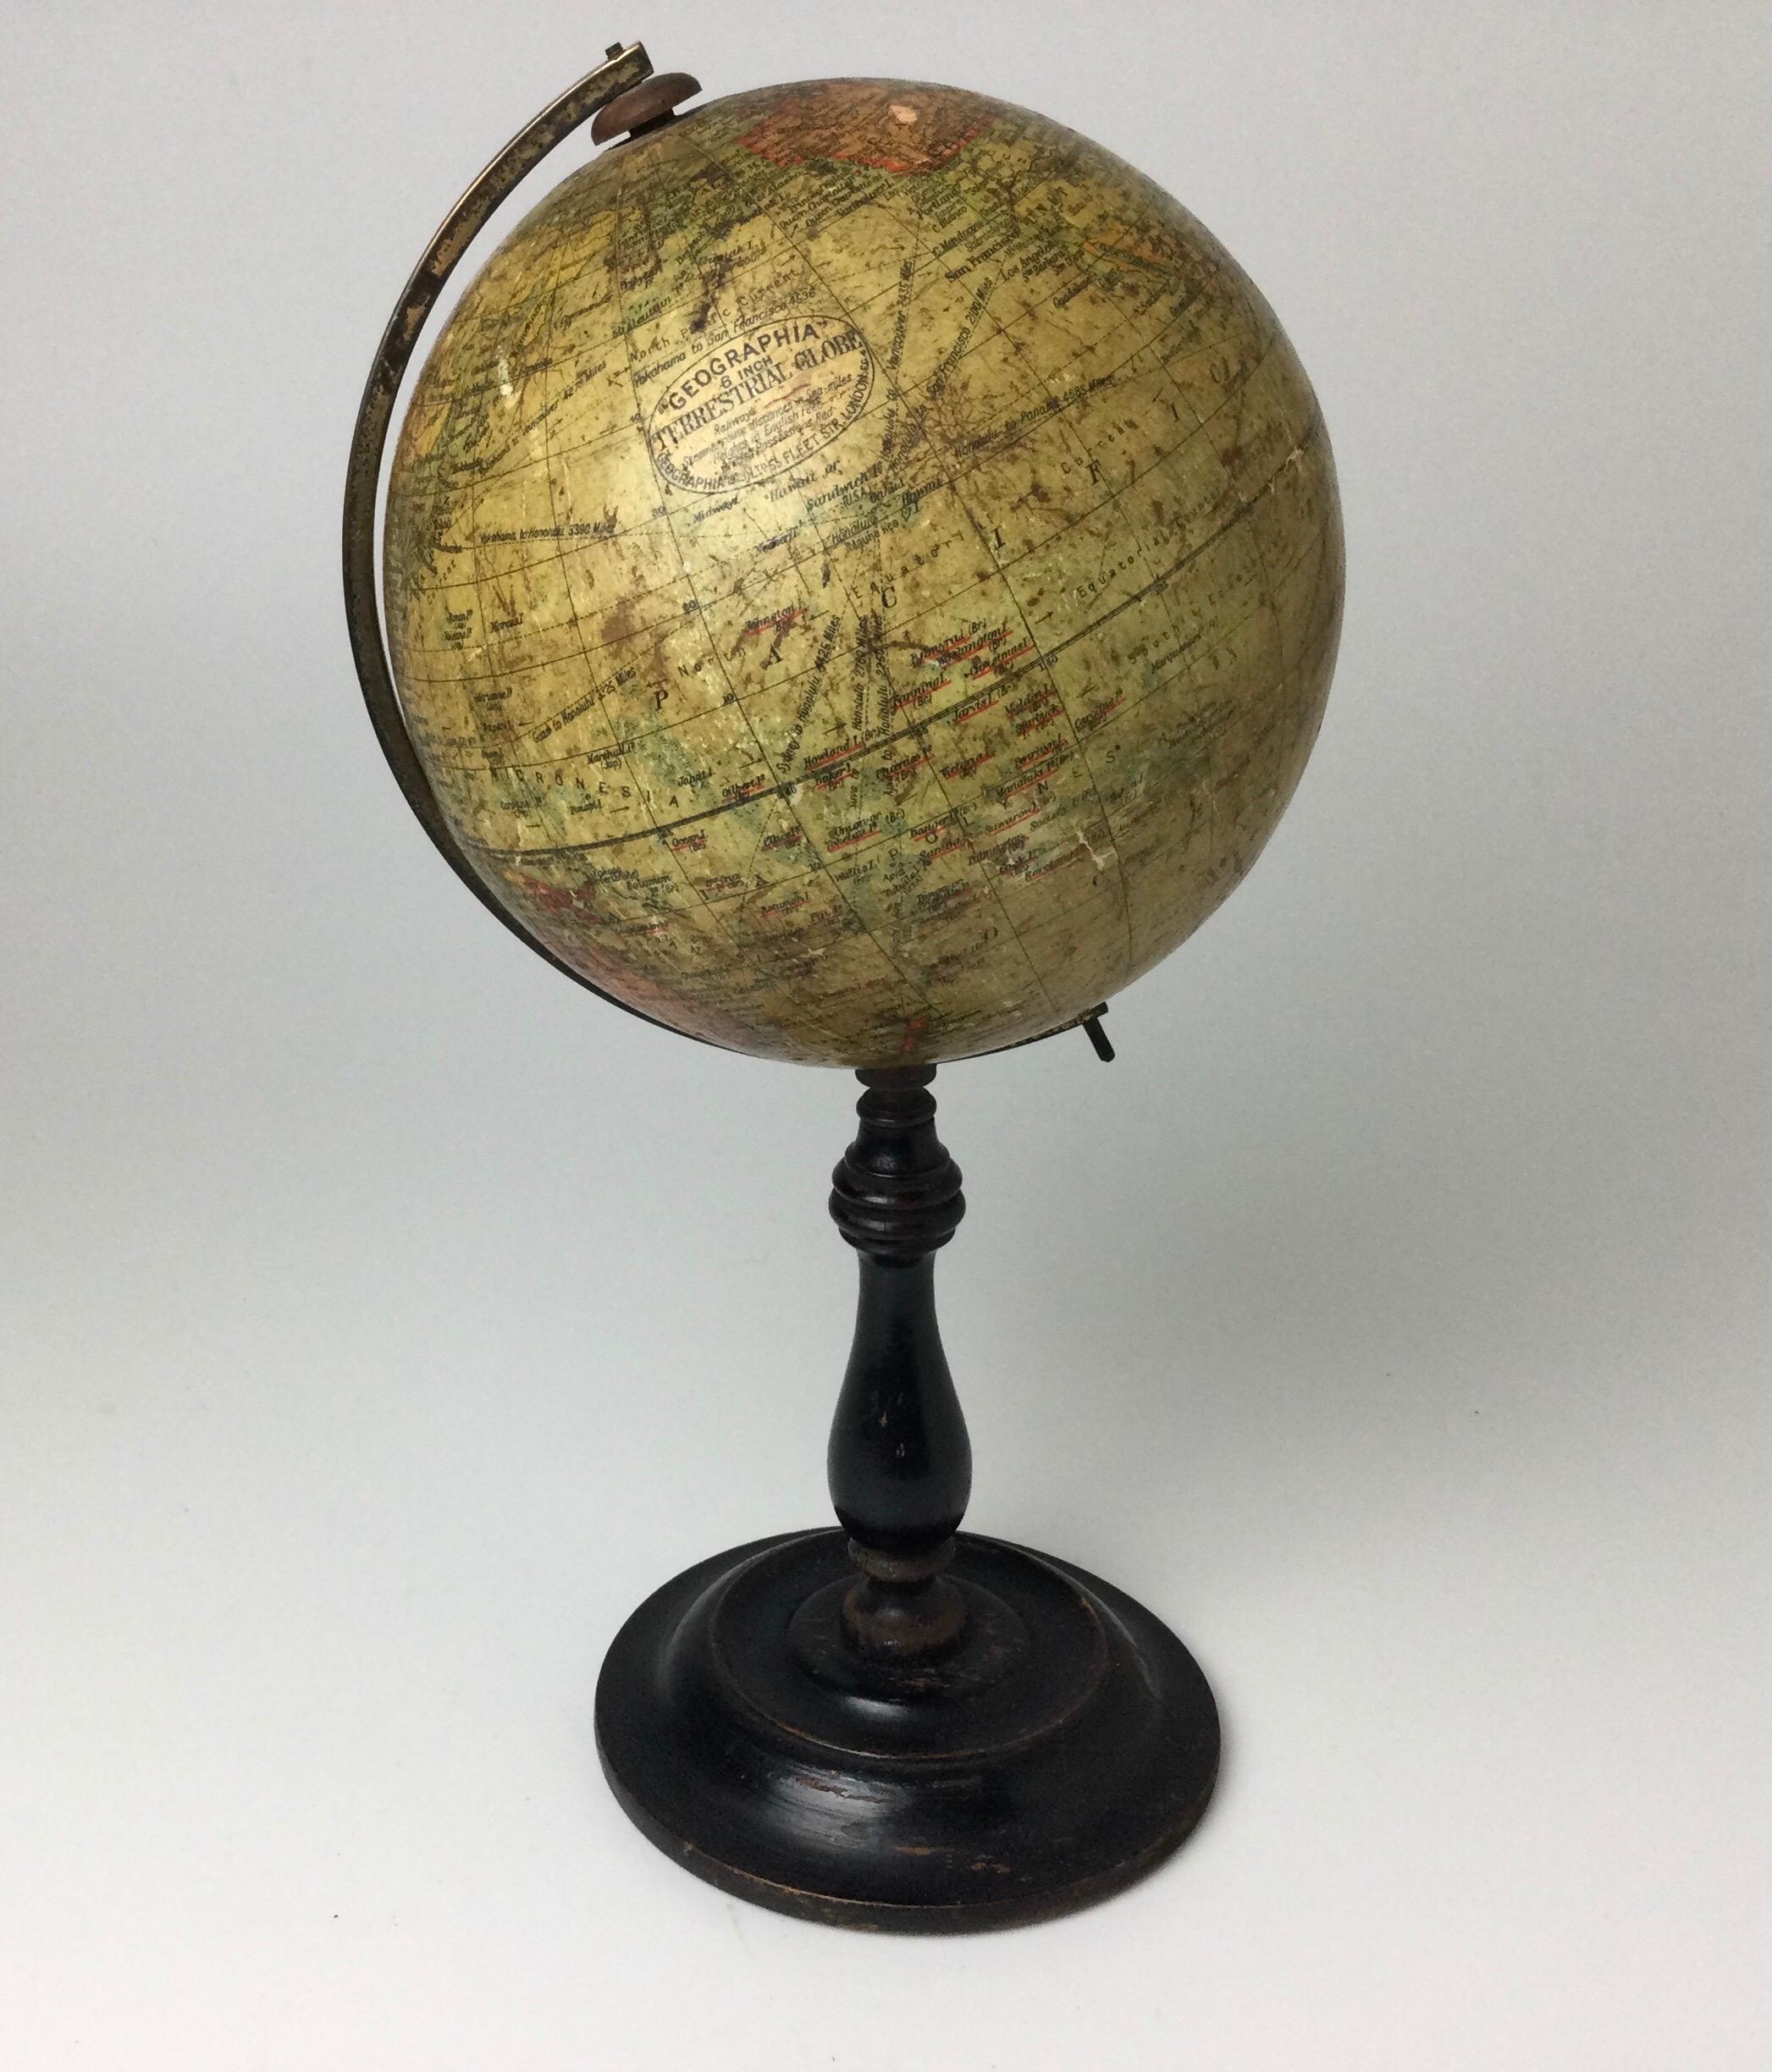 Wood Geographia 6 inch Terrestrial Globe London, 1923